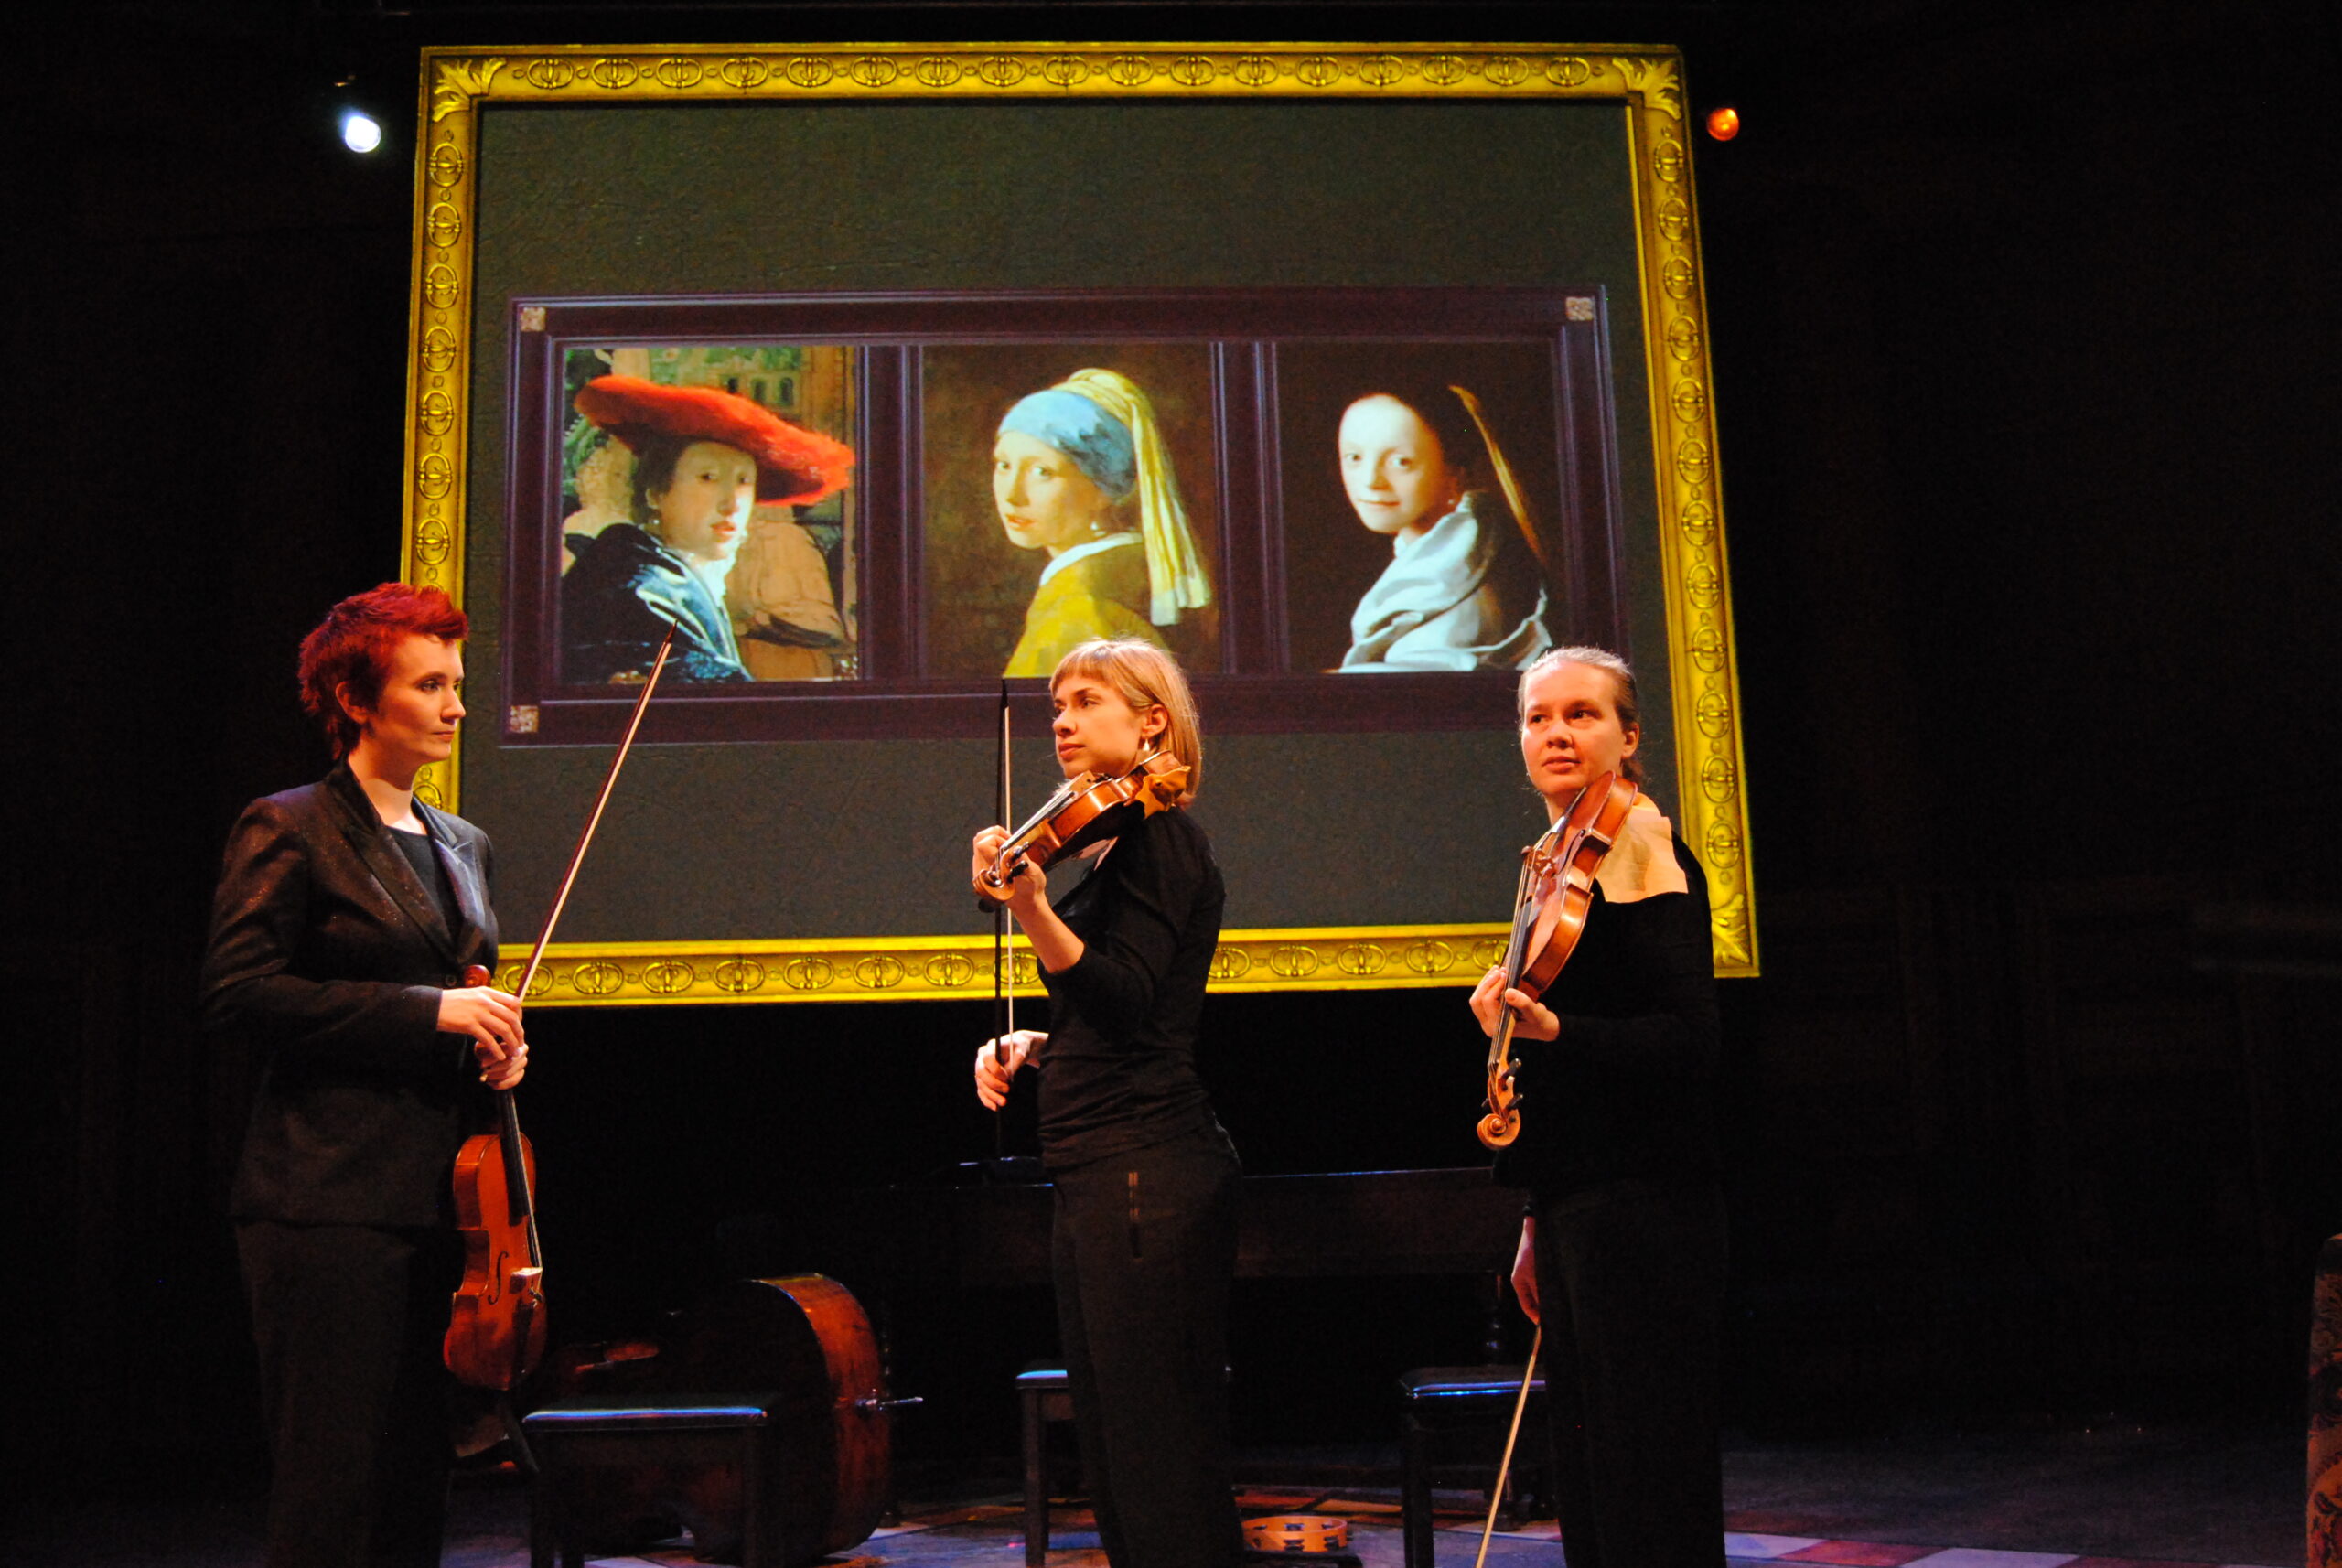 Aisslinn Nosky, Cristina Zacharias and Geneviève Gilardeau with three Vermeer Images